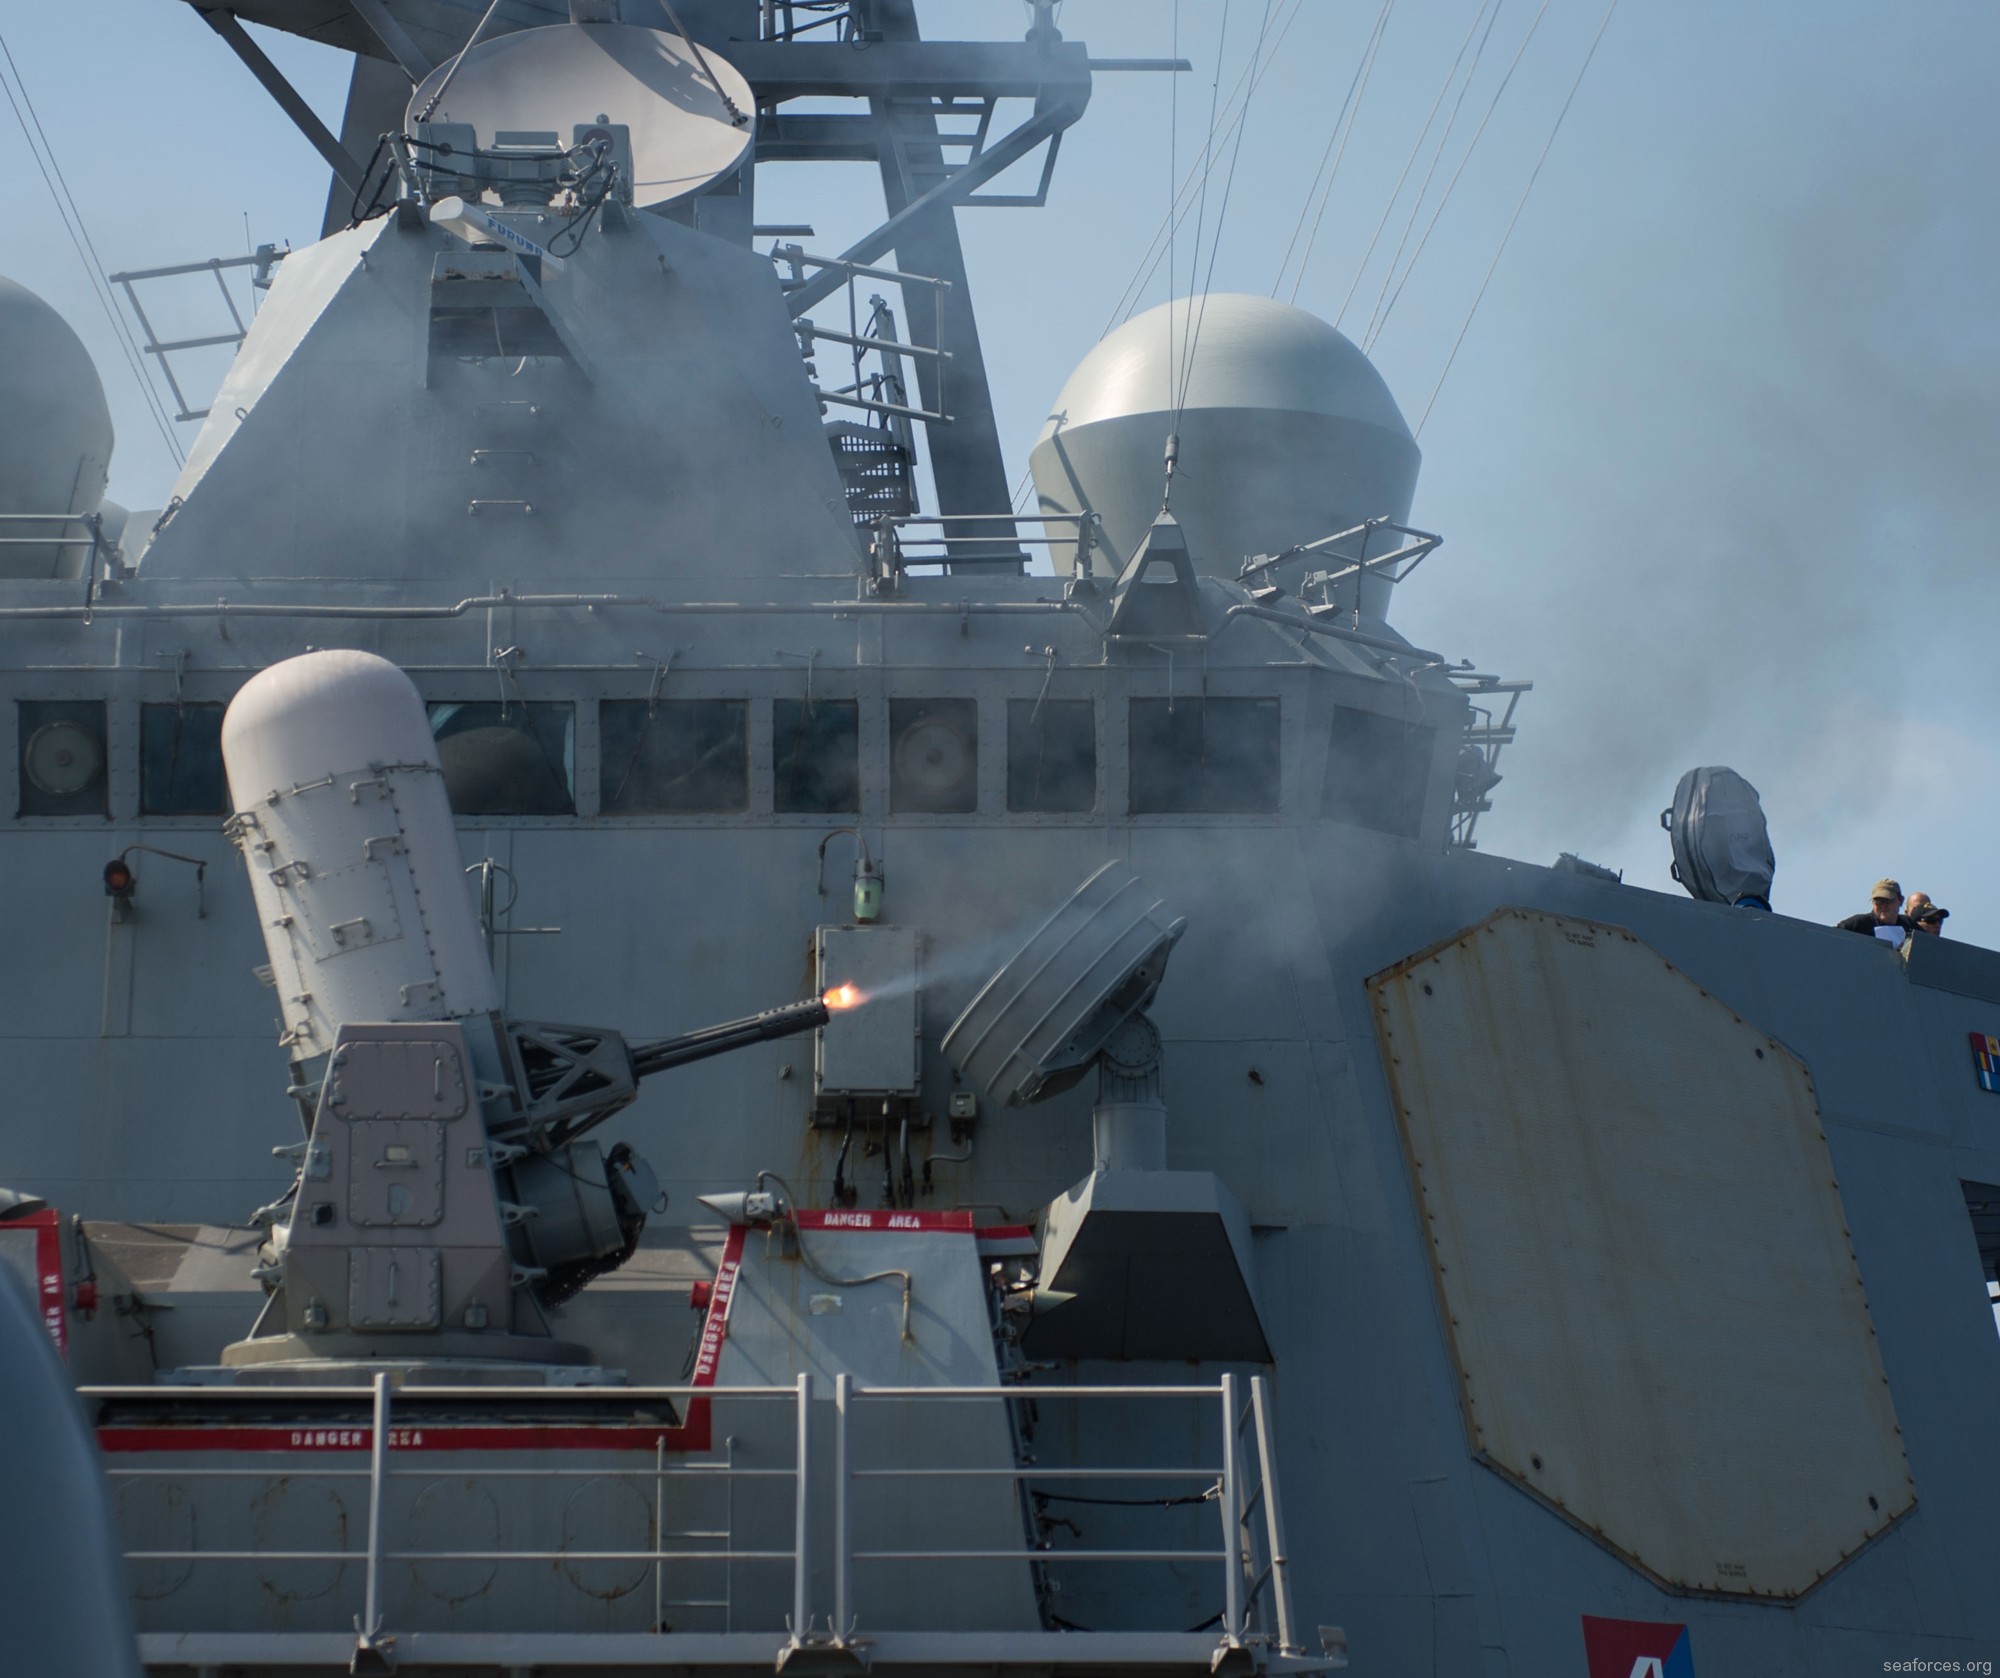 ddg-57 uss mitscher guided missile destroyer us navy 18 mk-15 ciws live fire exercise